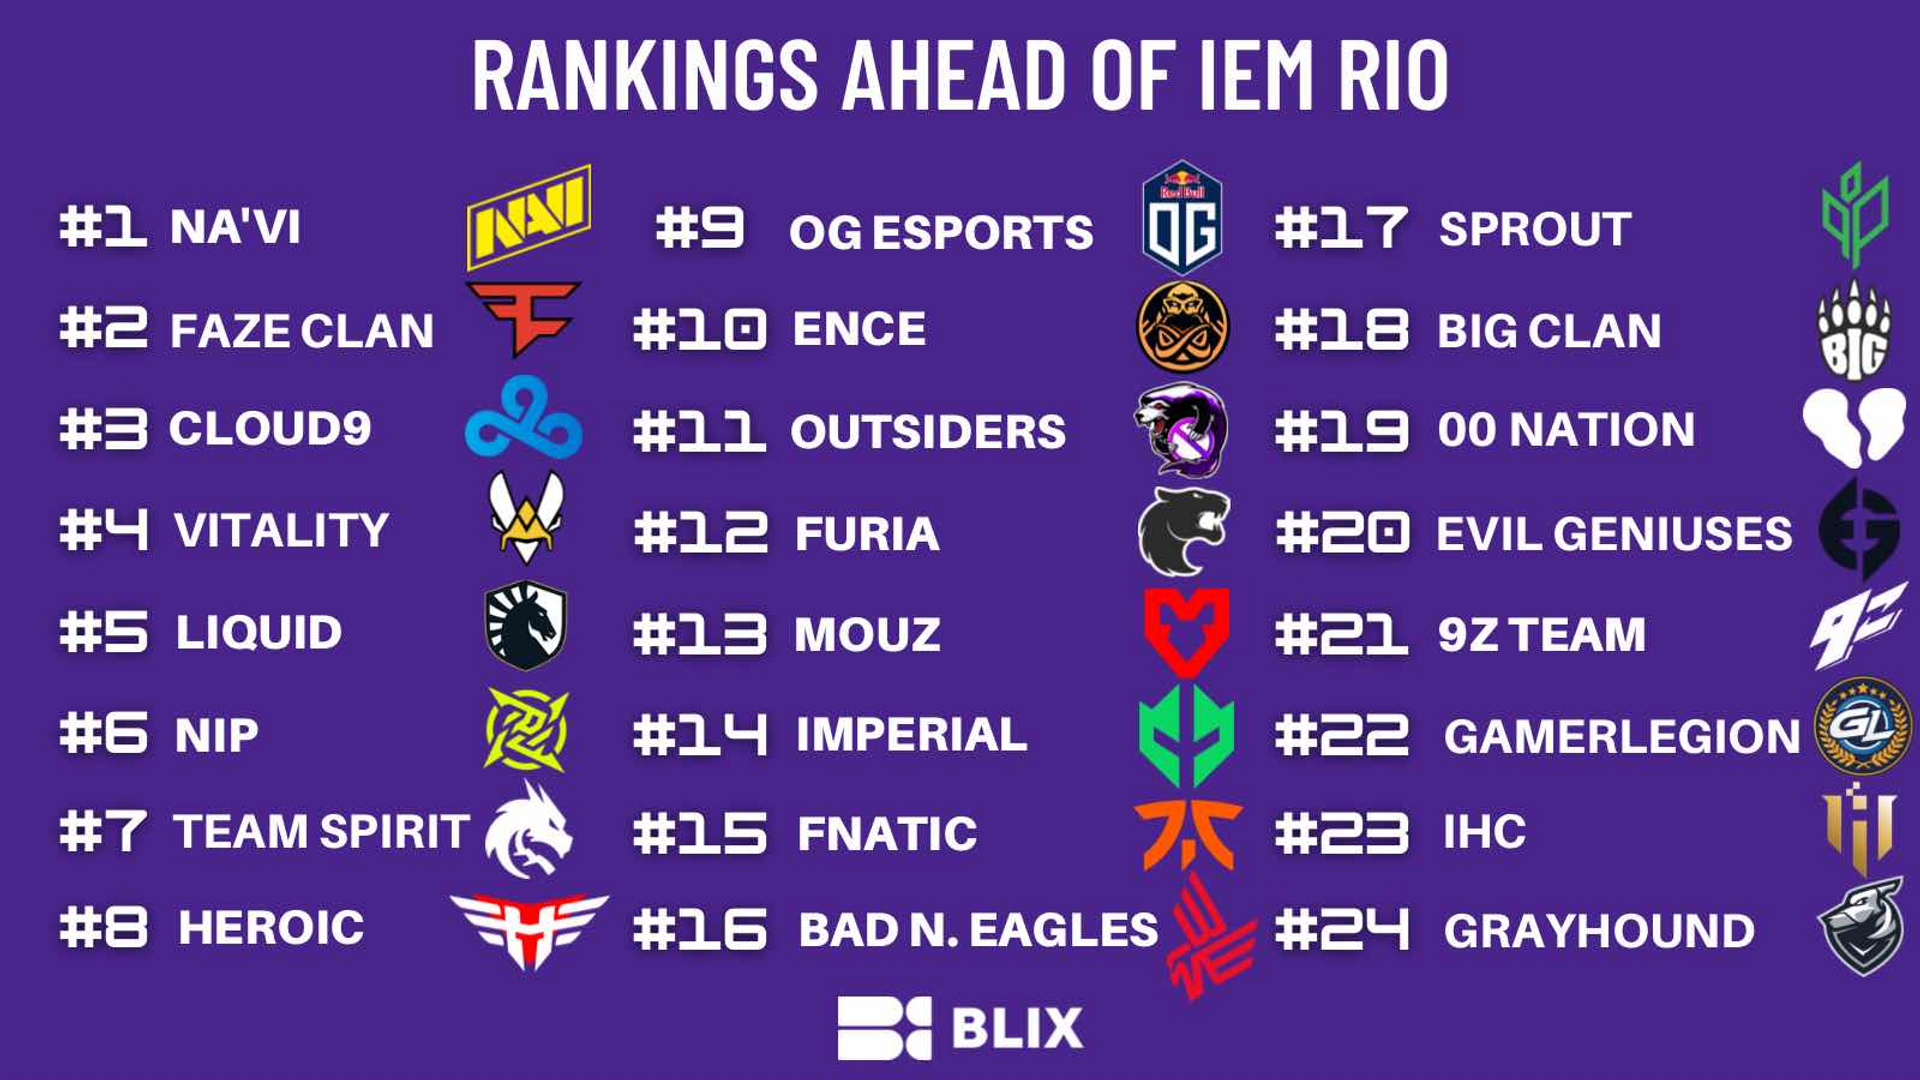 NAVI is the most popular team at IEM Rio Major 2022